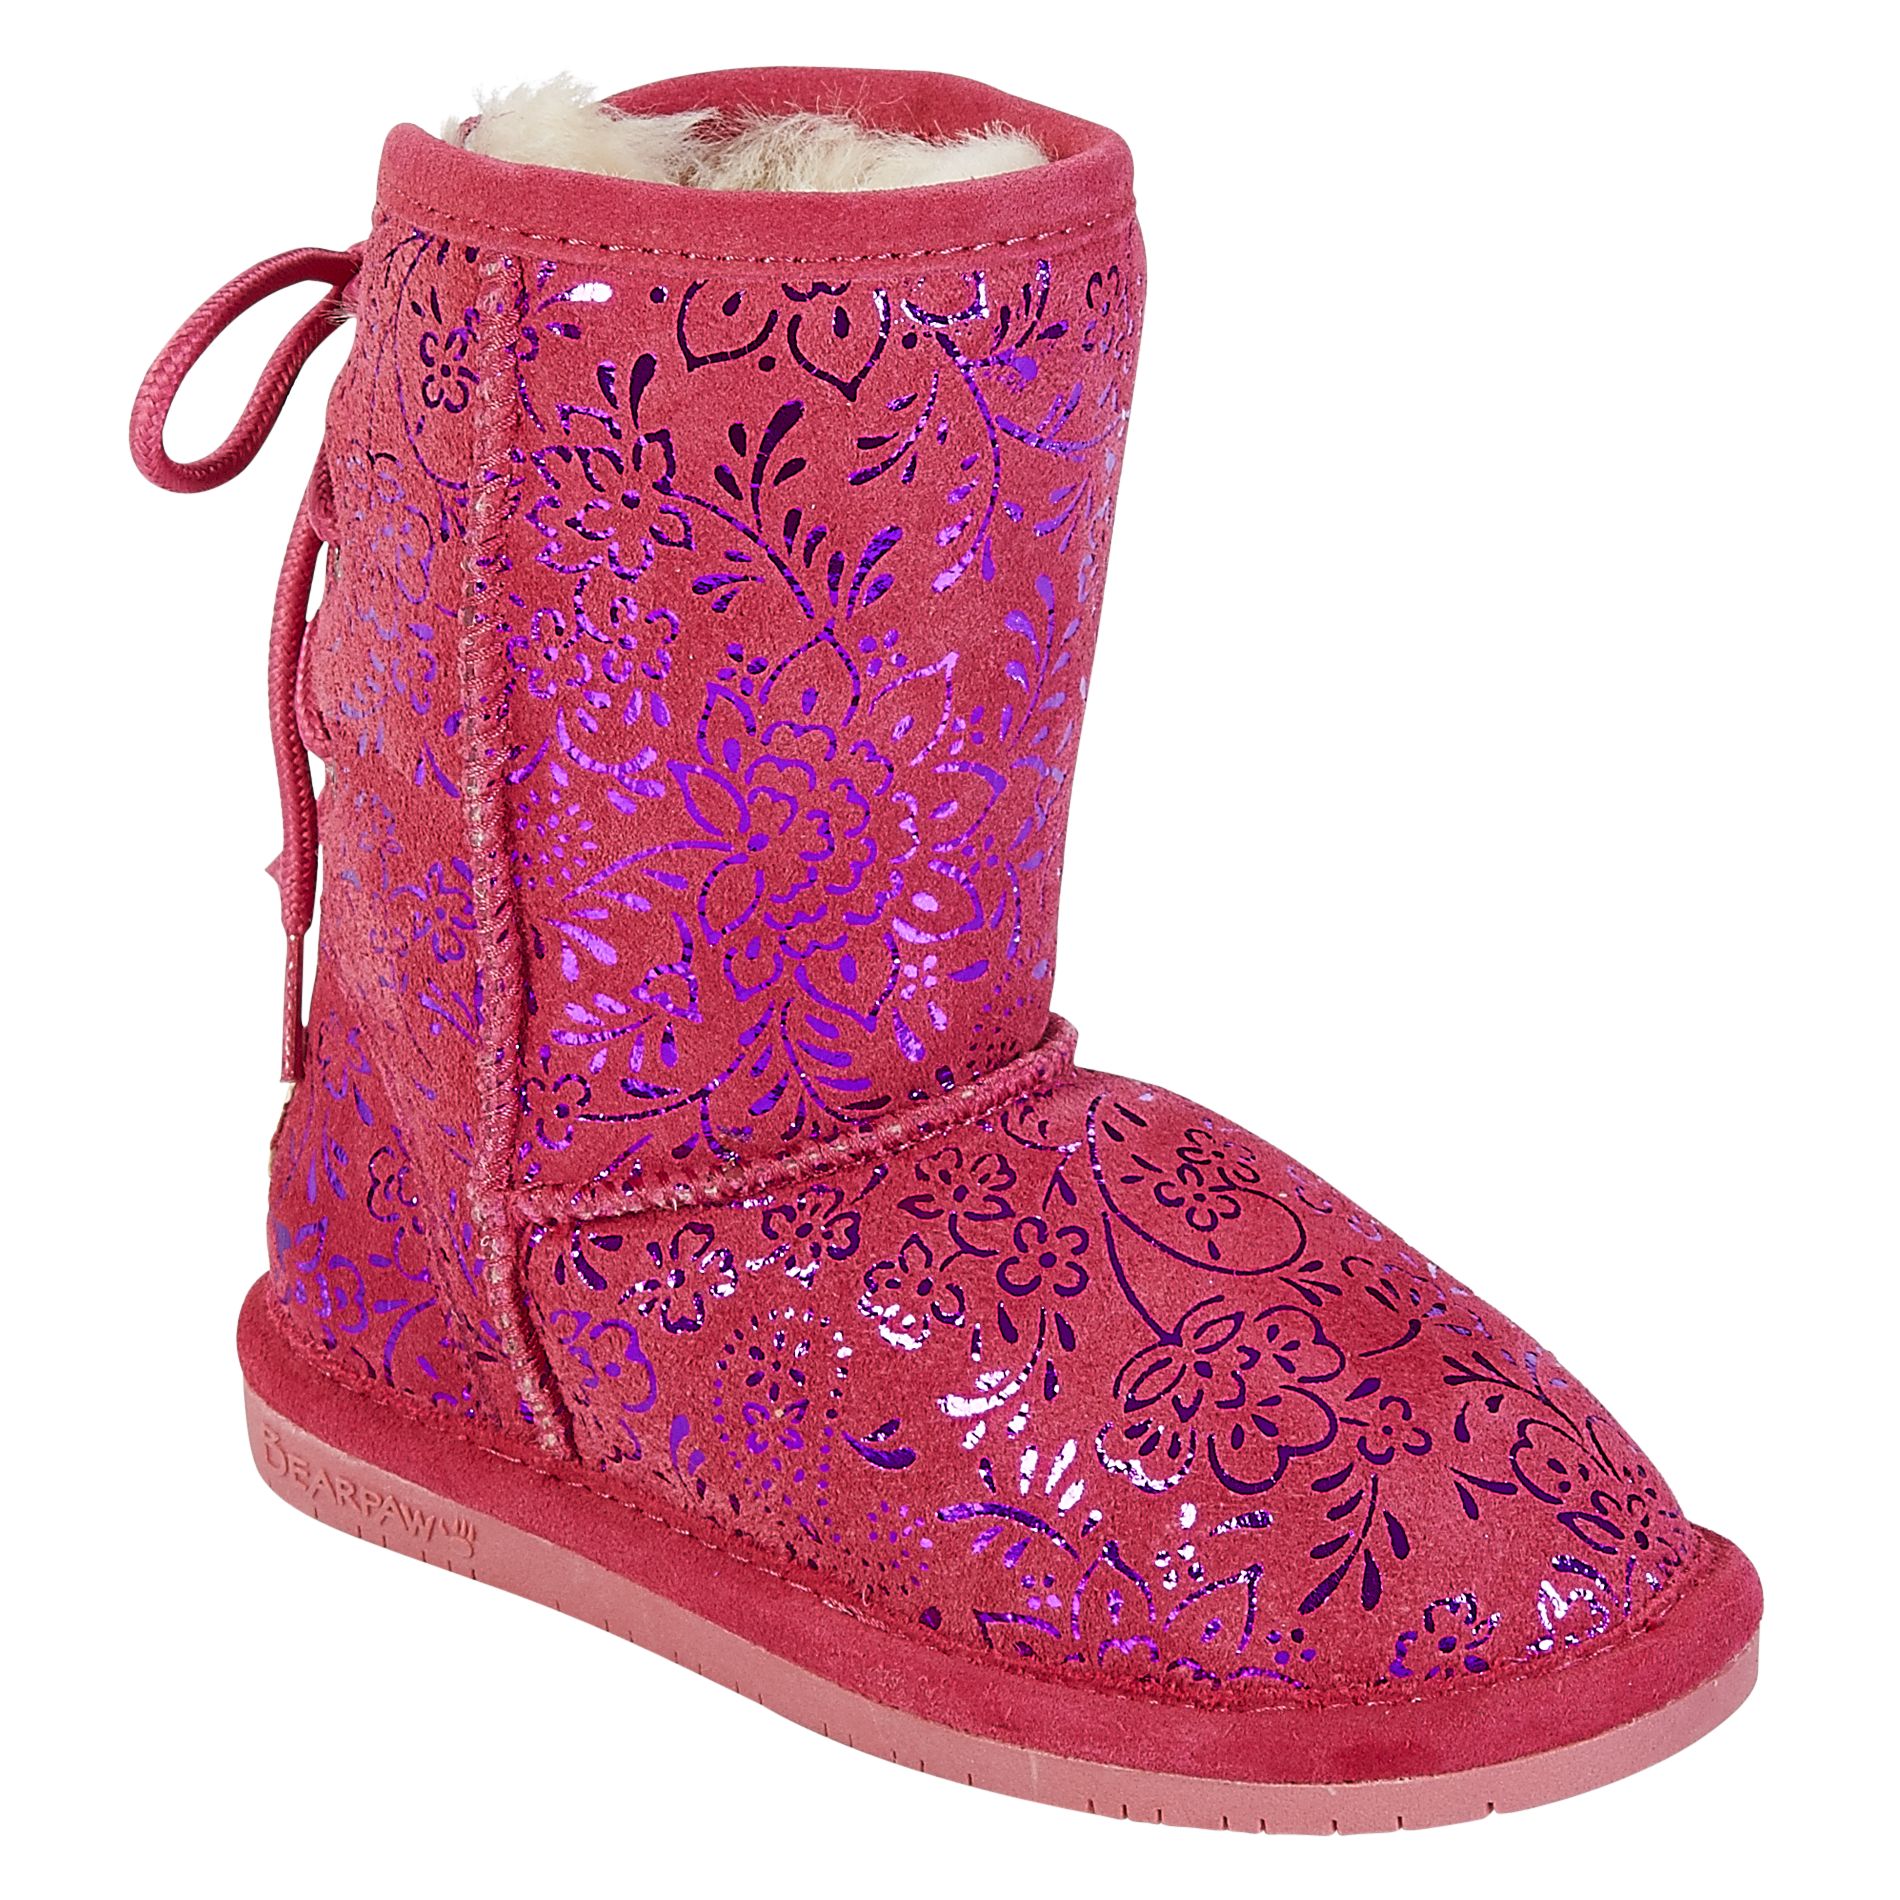 Bear Paw Girl's Fashion Boot - Ellie - Pink